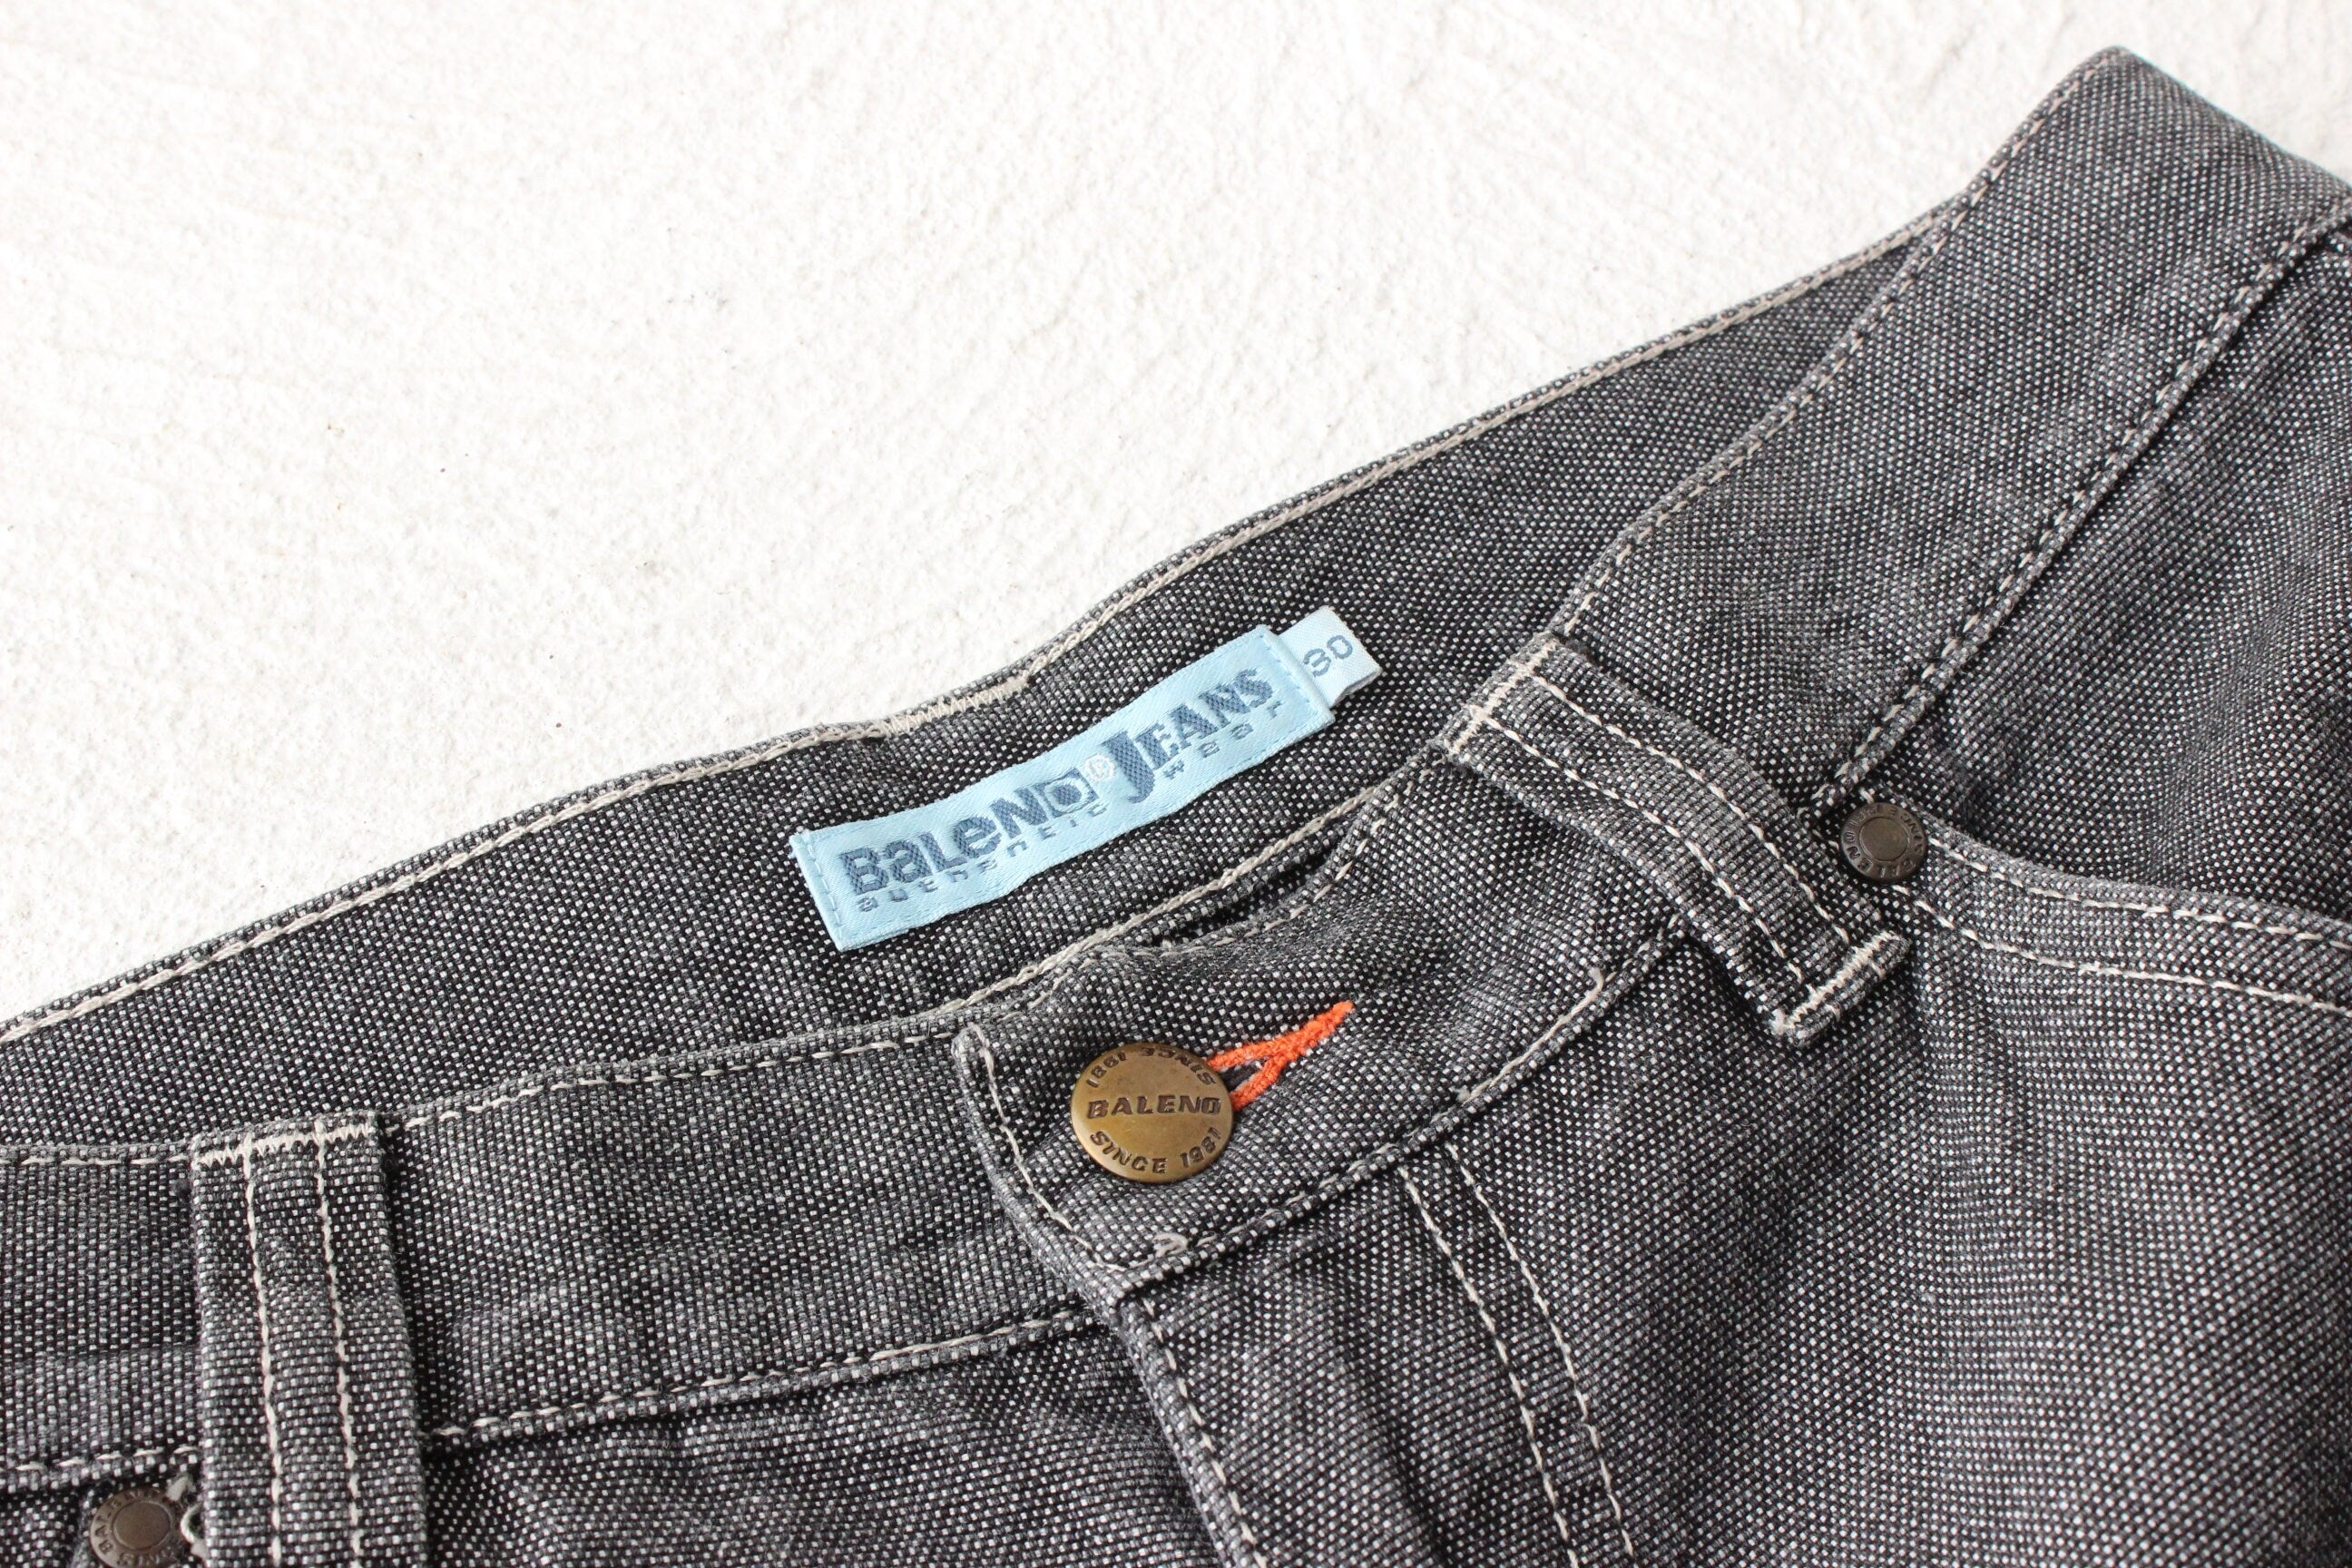 90s Metallic Jeans by Baleno